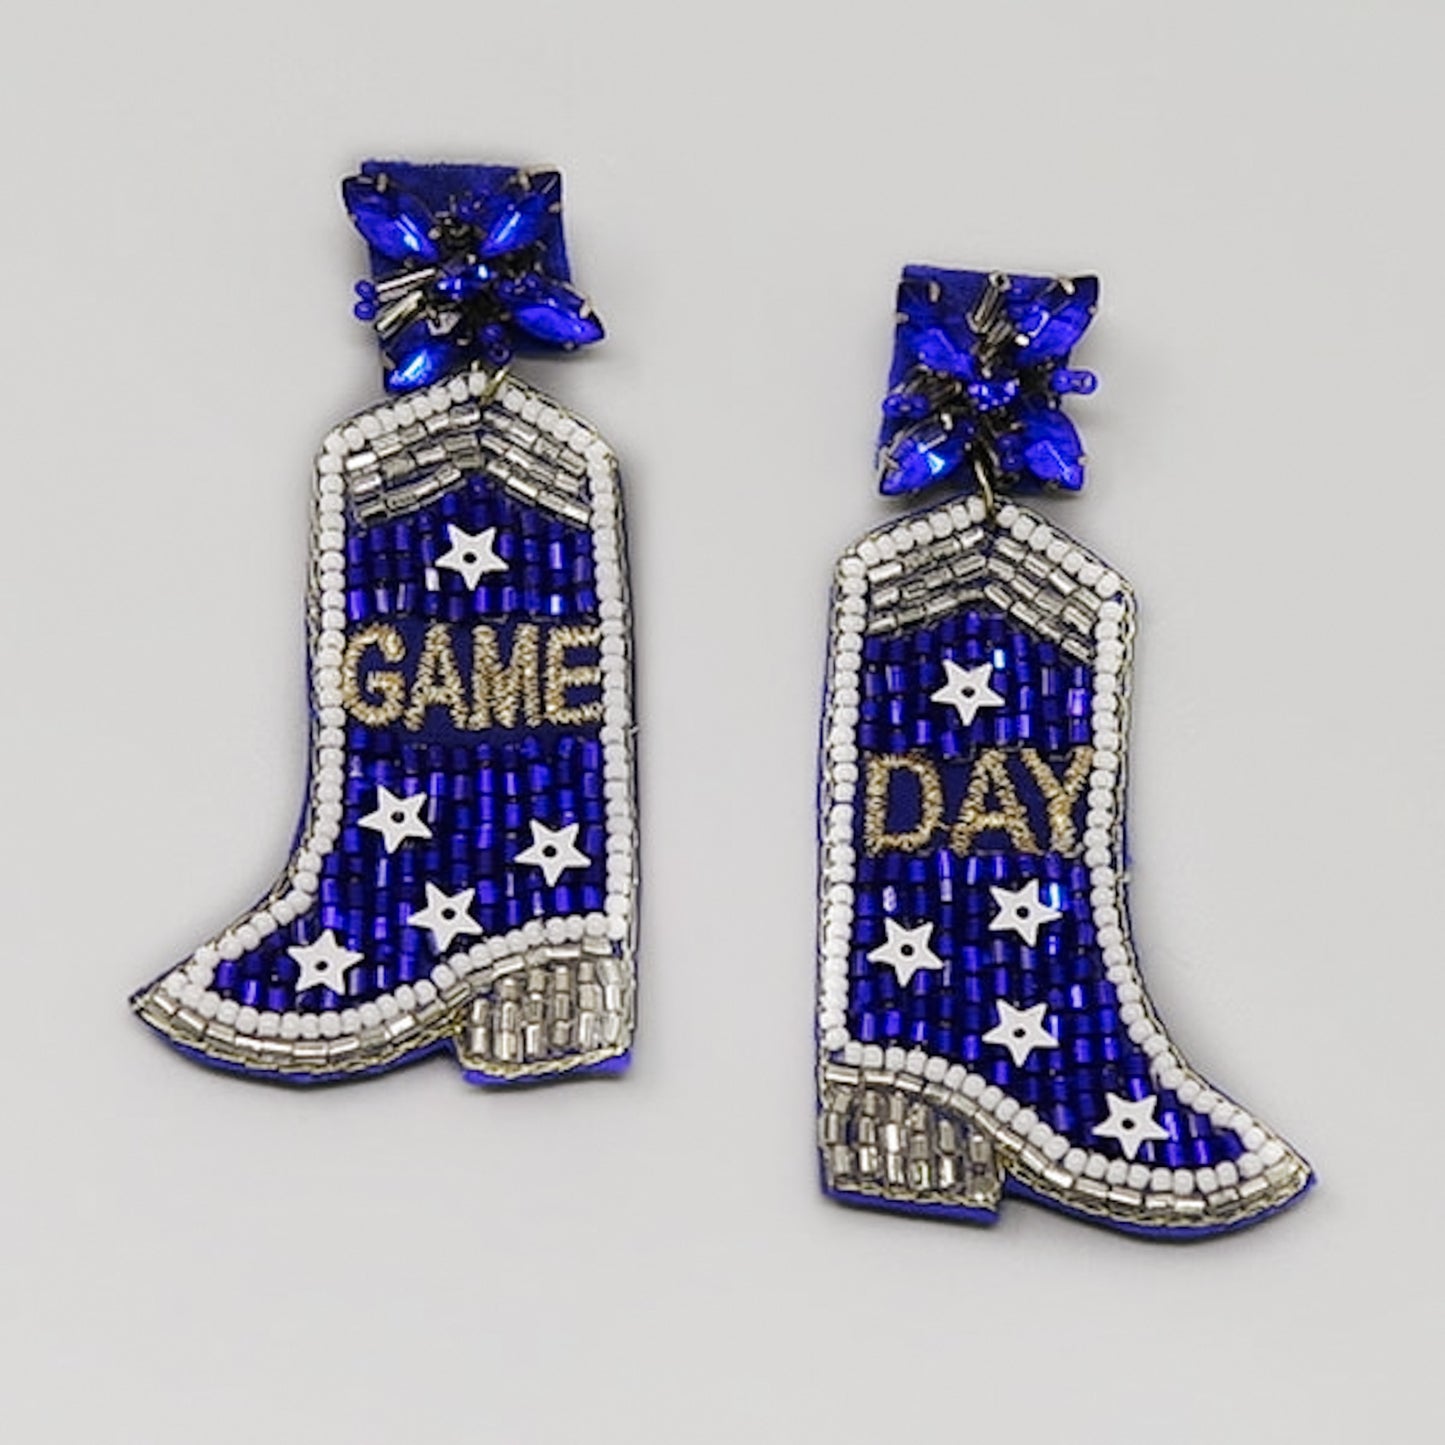 Team boots earrings